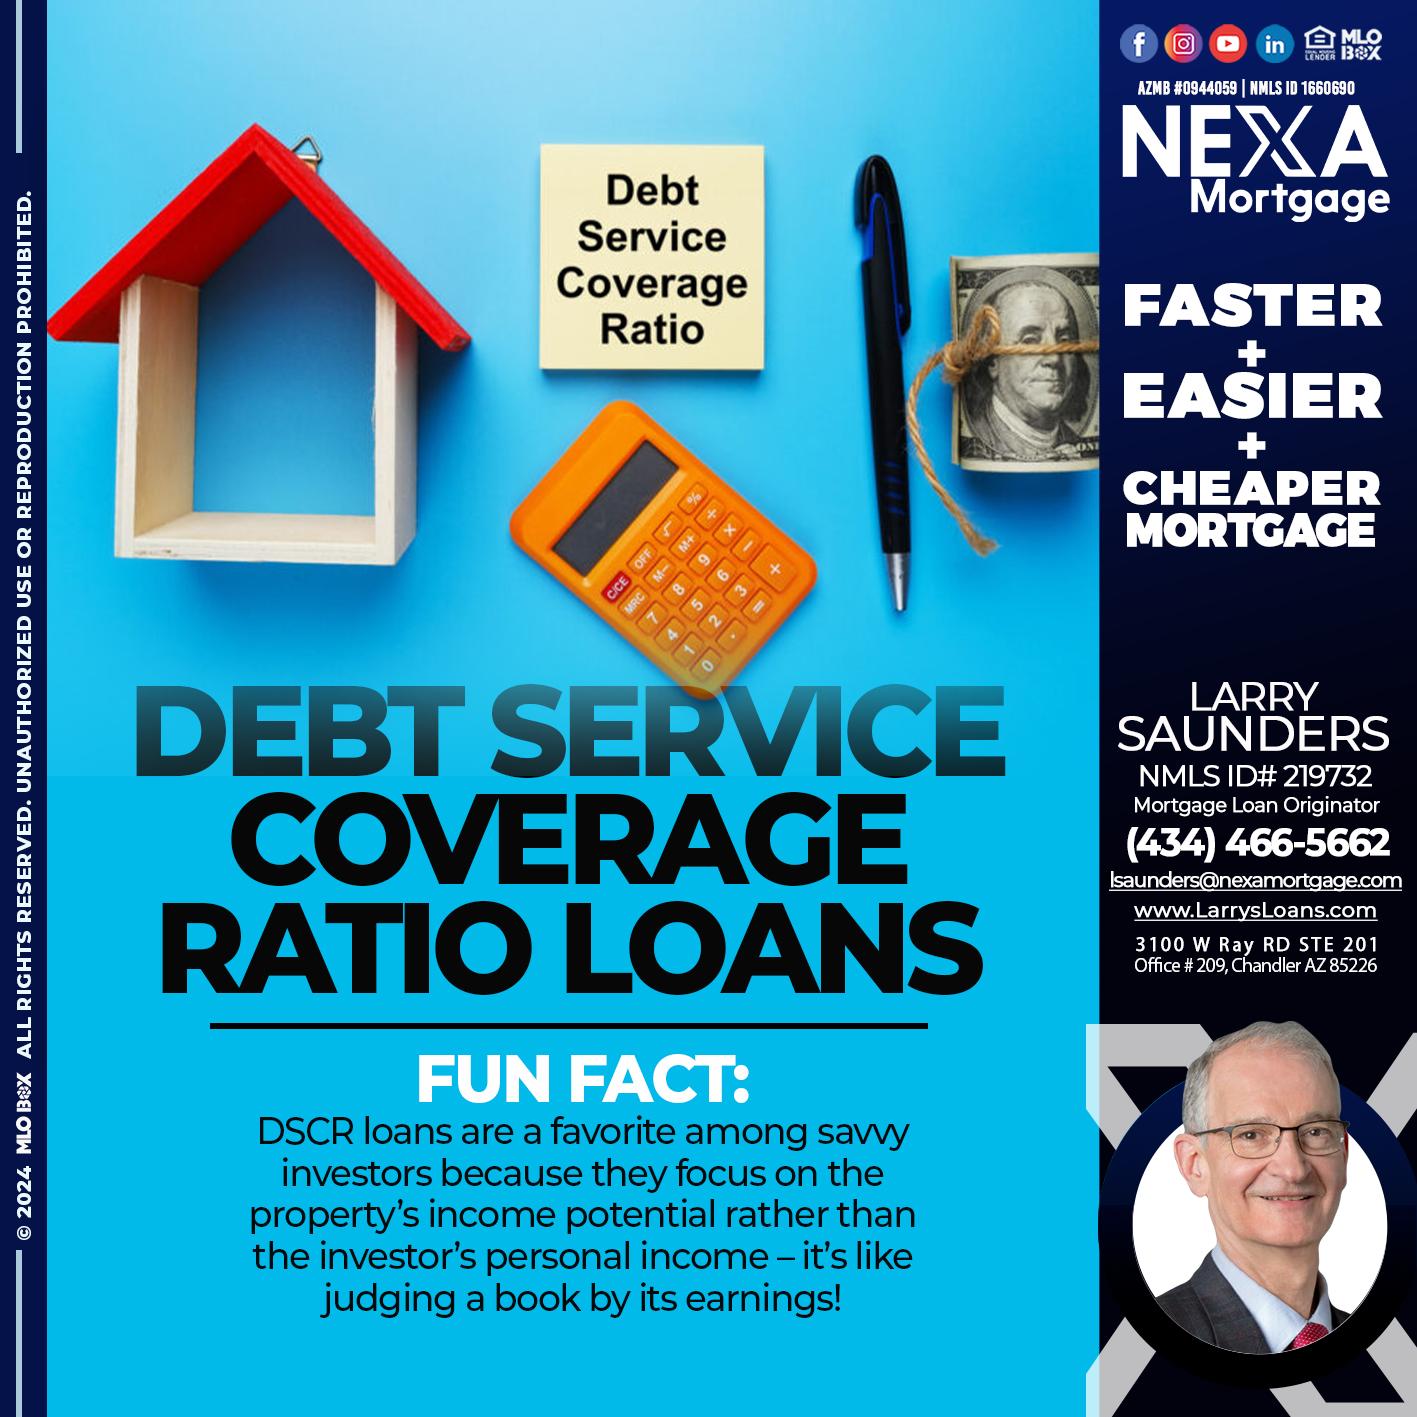 DEBT - Larry Saunders -Mortgage Loan Originator